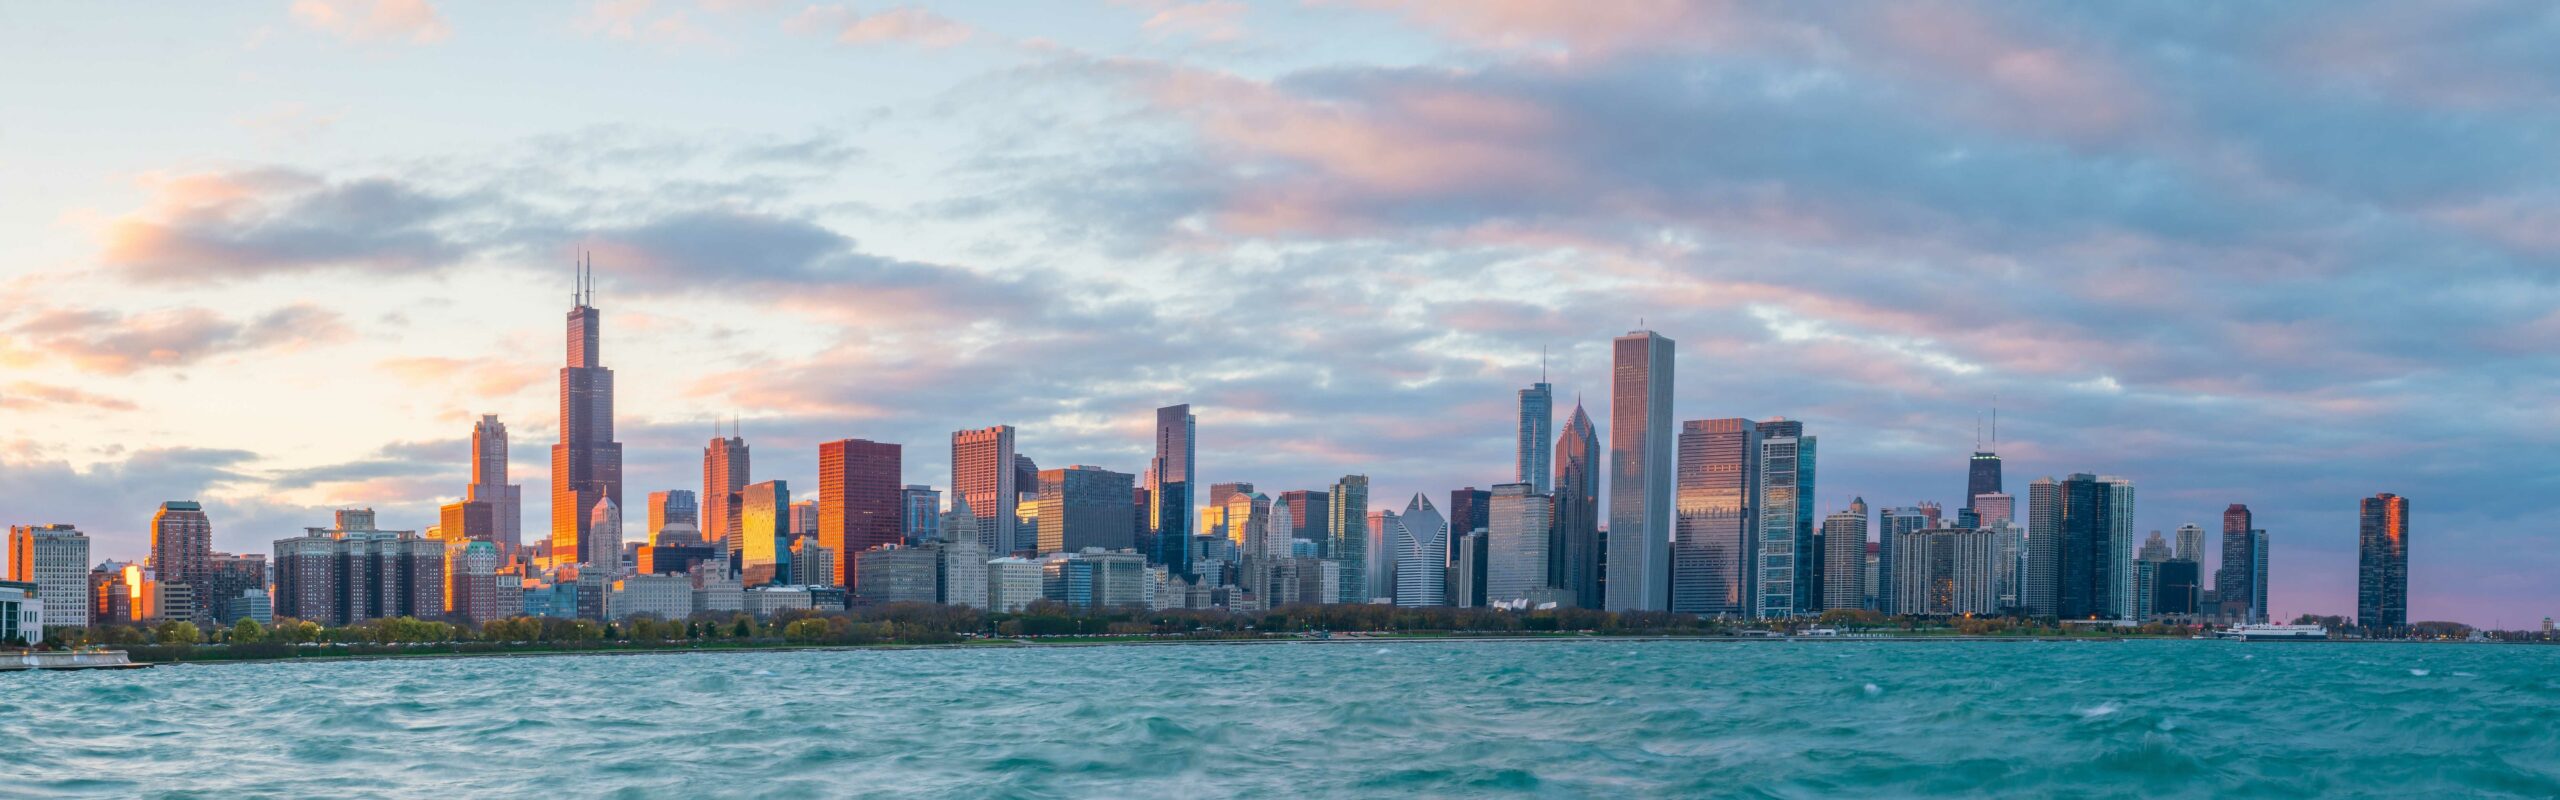 chicago skyline 1 scaled